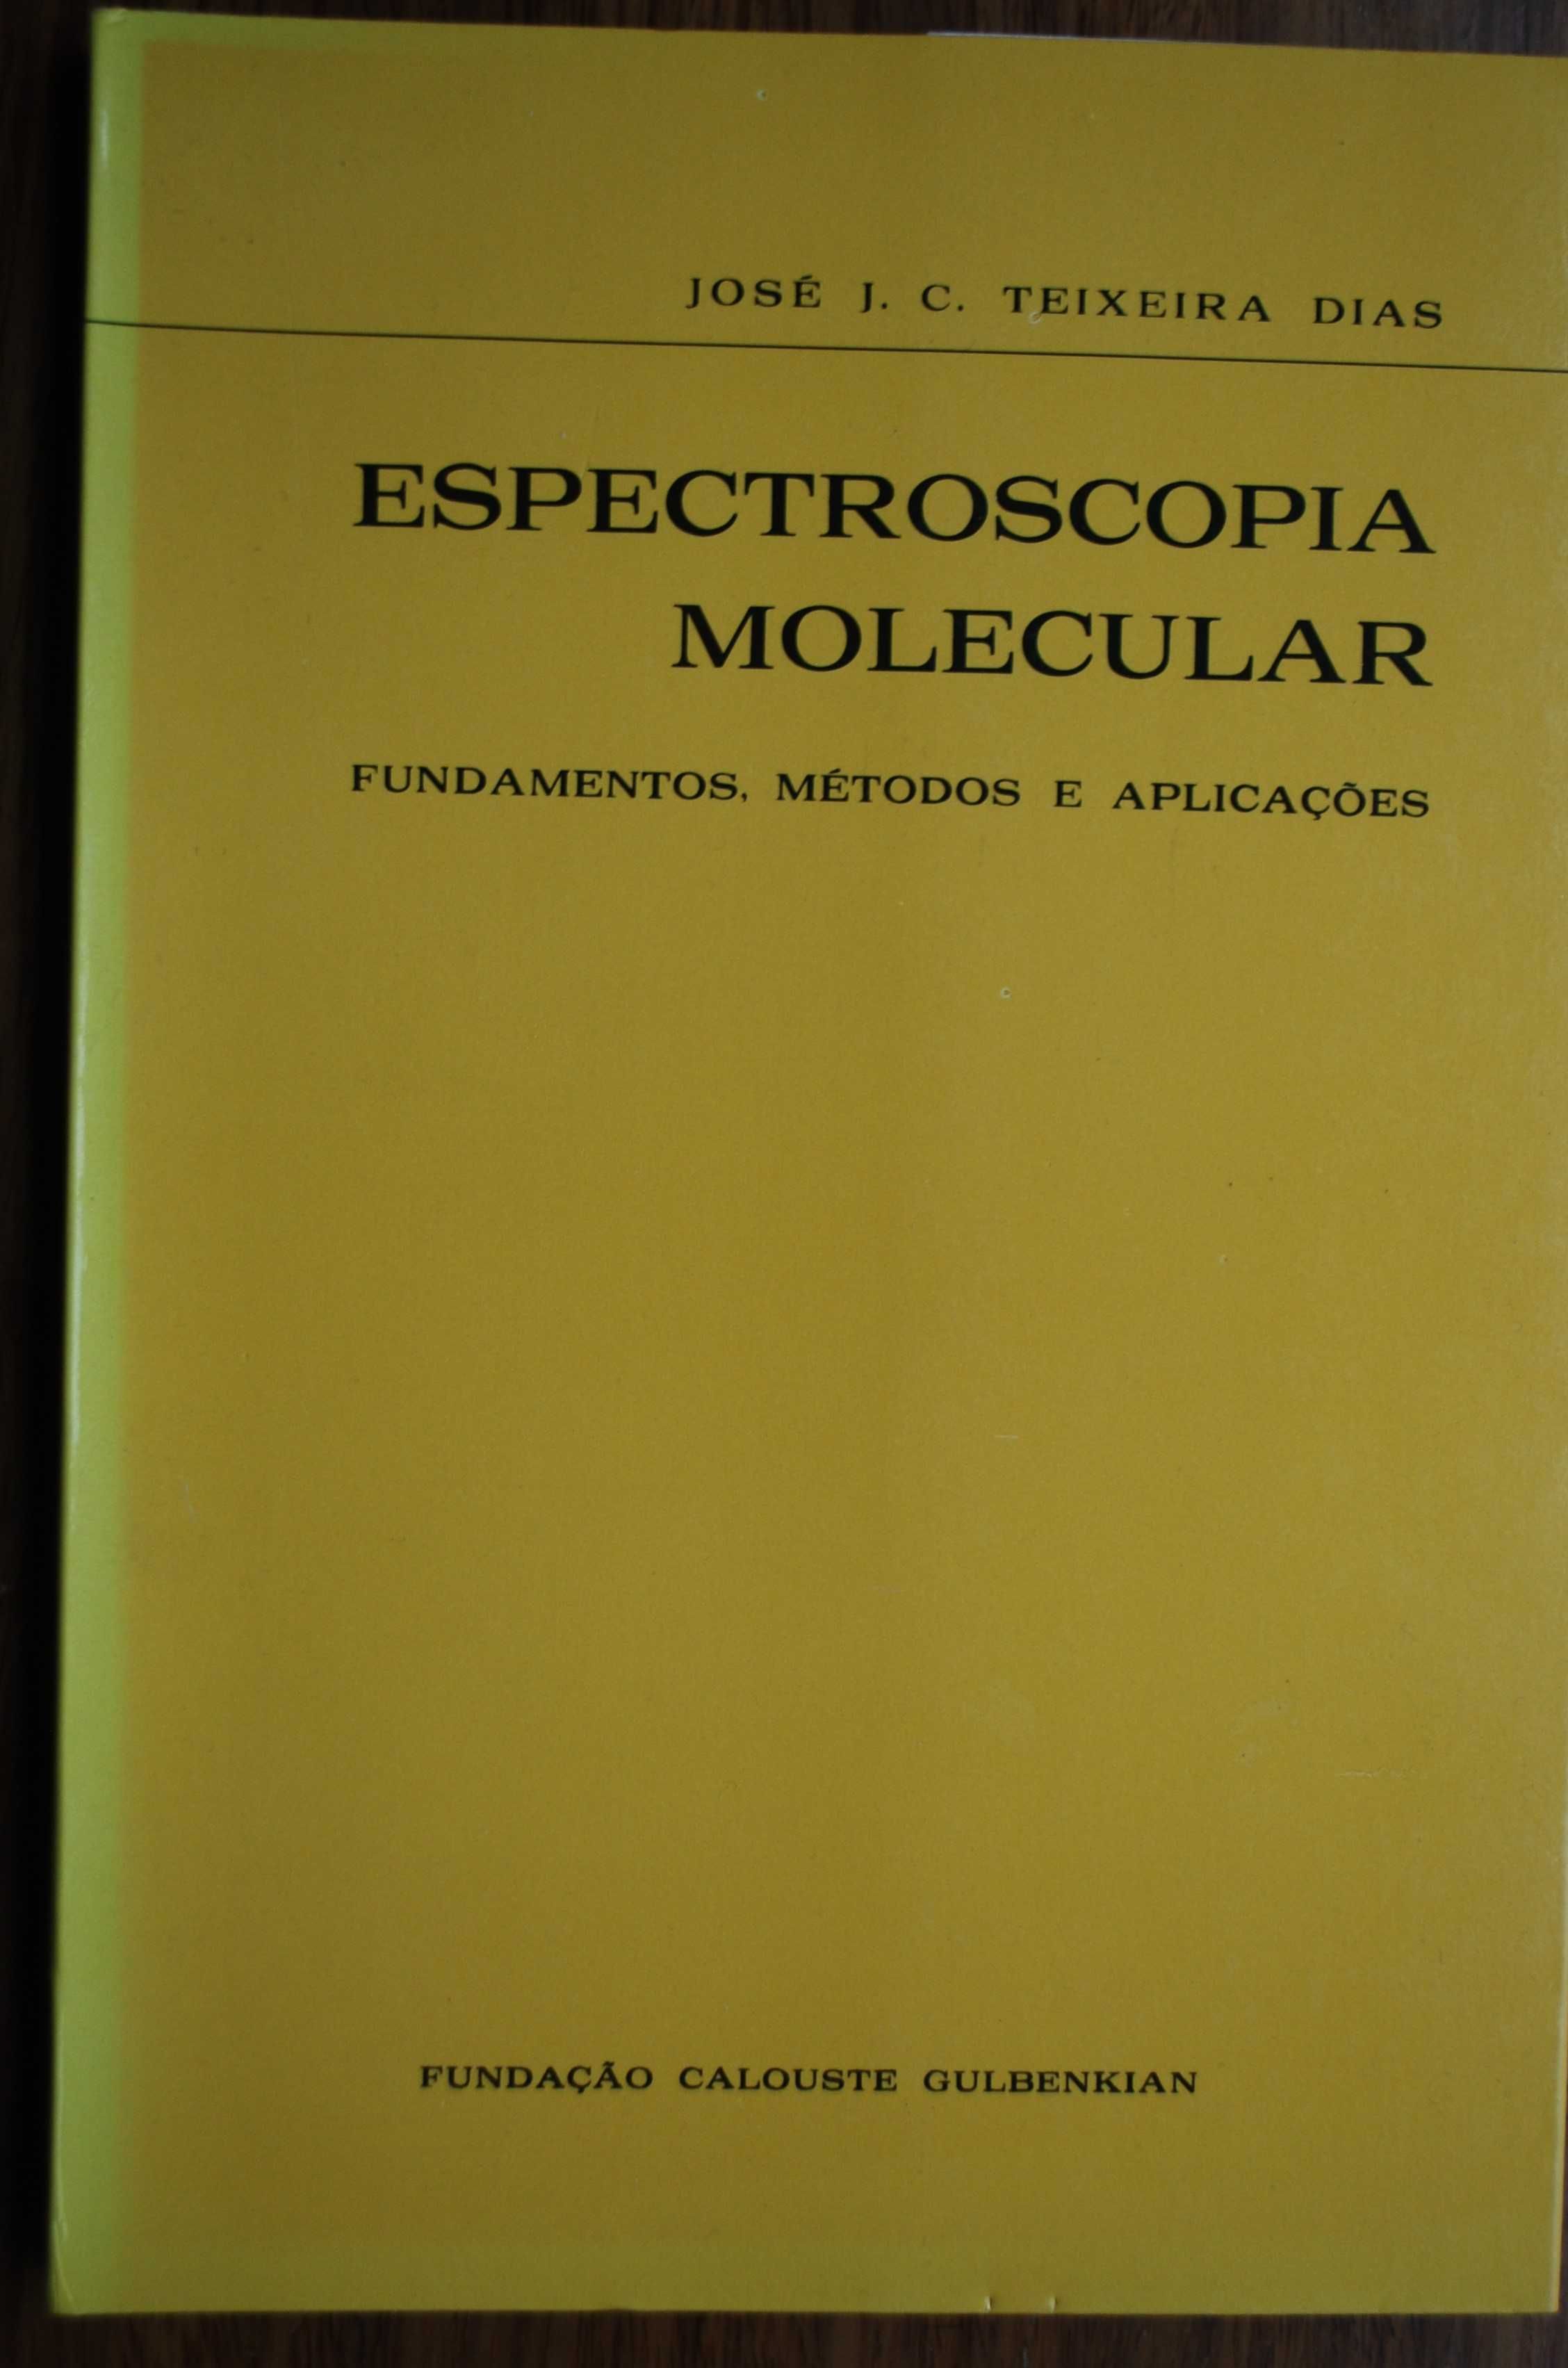 Espectroscopia Molecular (Fundamentos, Métodos e Aplicações)